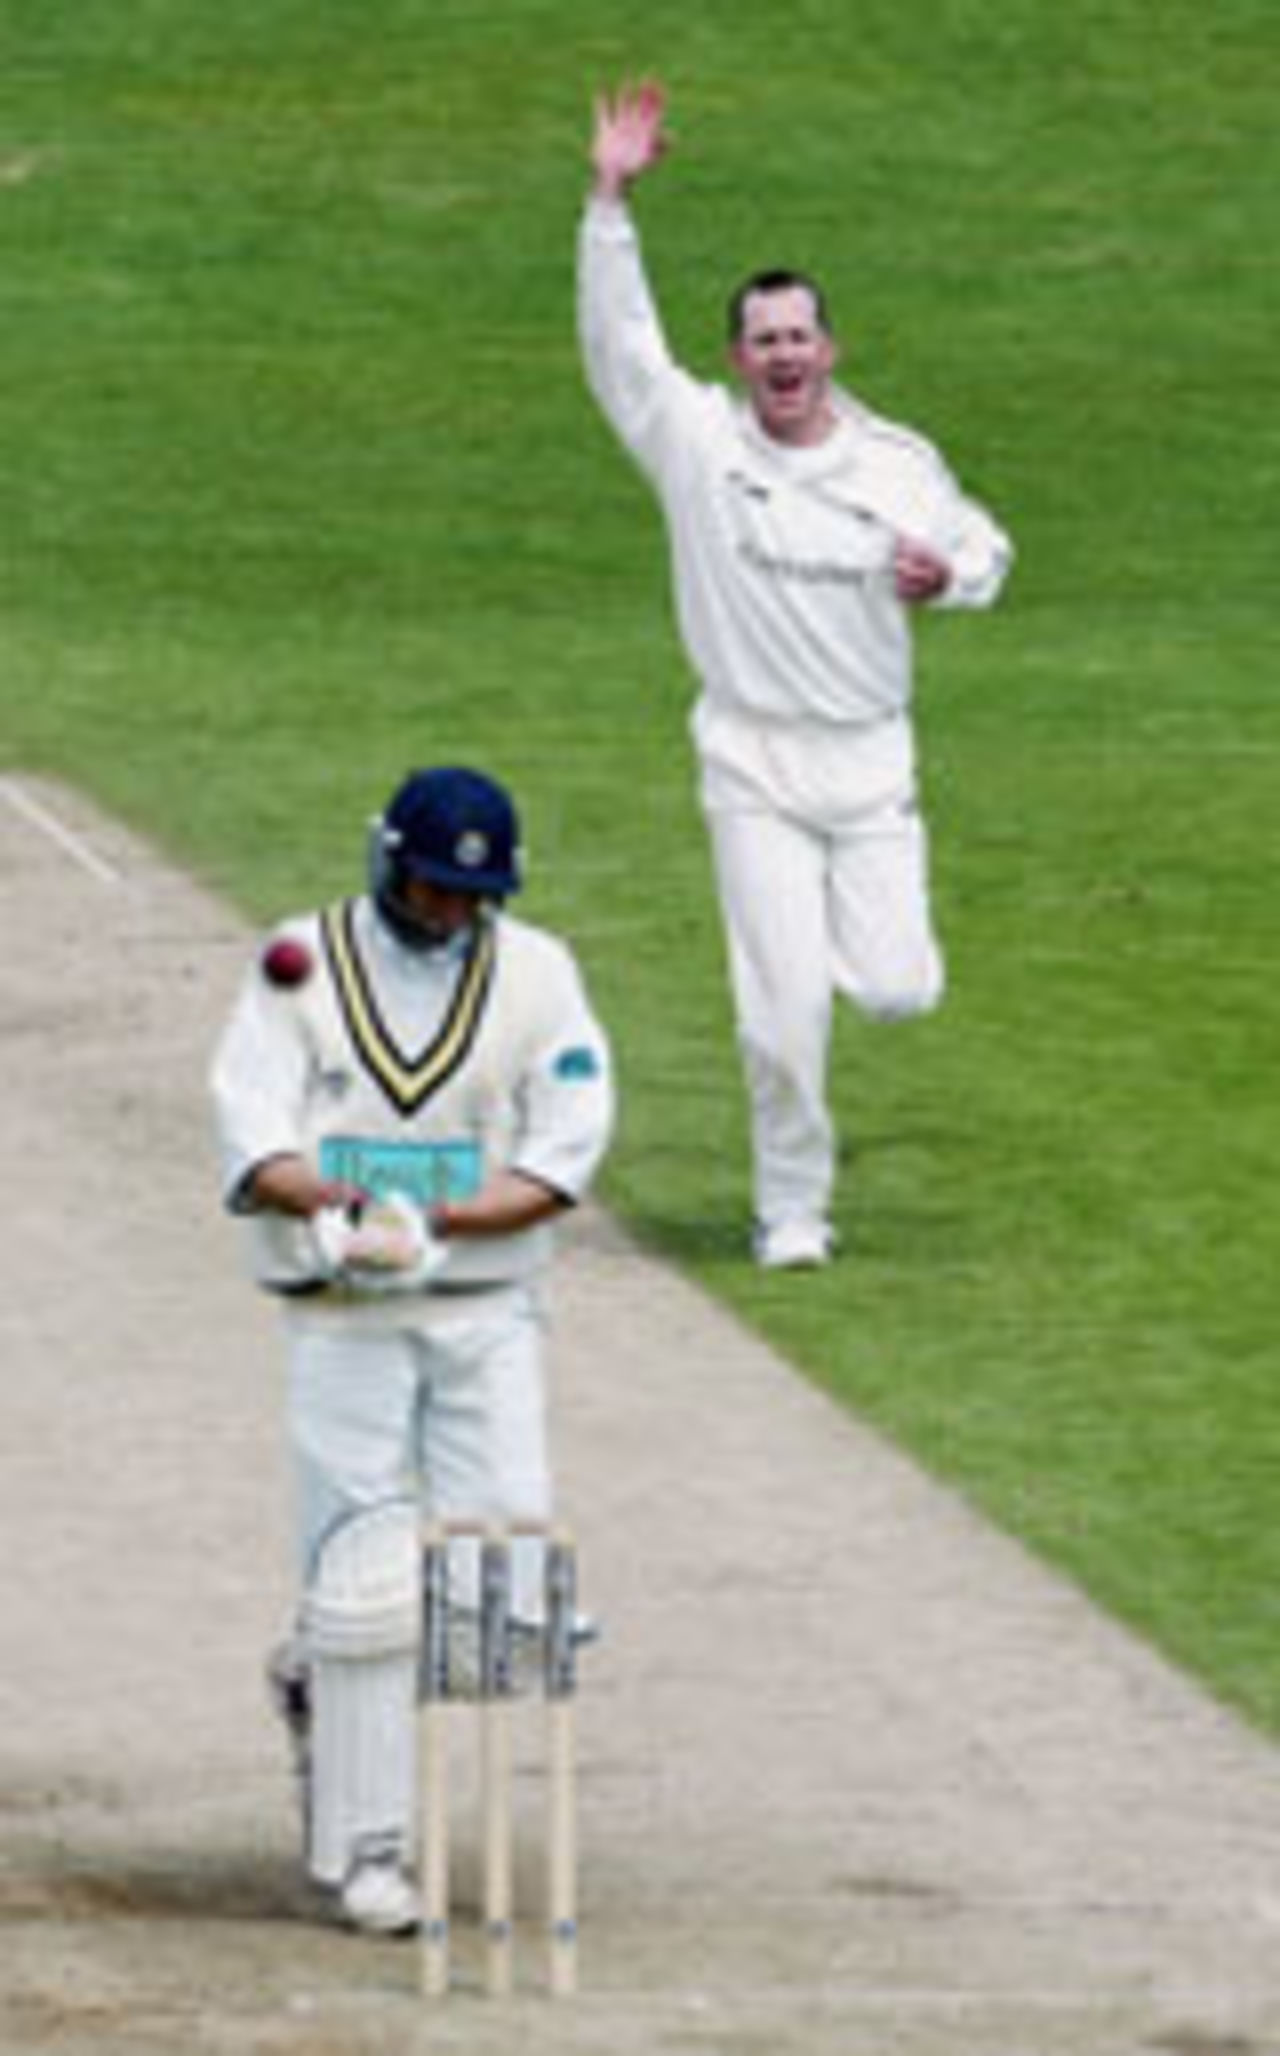 Craig White celebrates the wicket of Nic Pothas, Yorkshire v Hampshire, Headingley, May 14, 2004